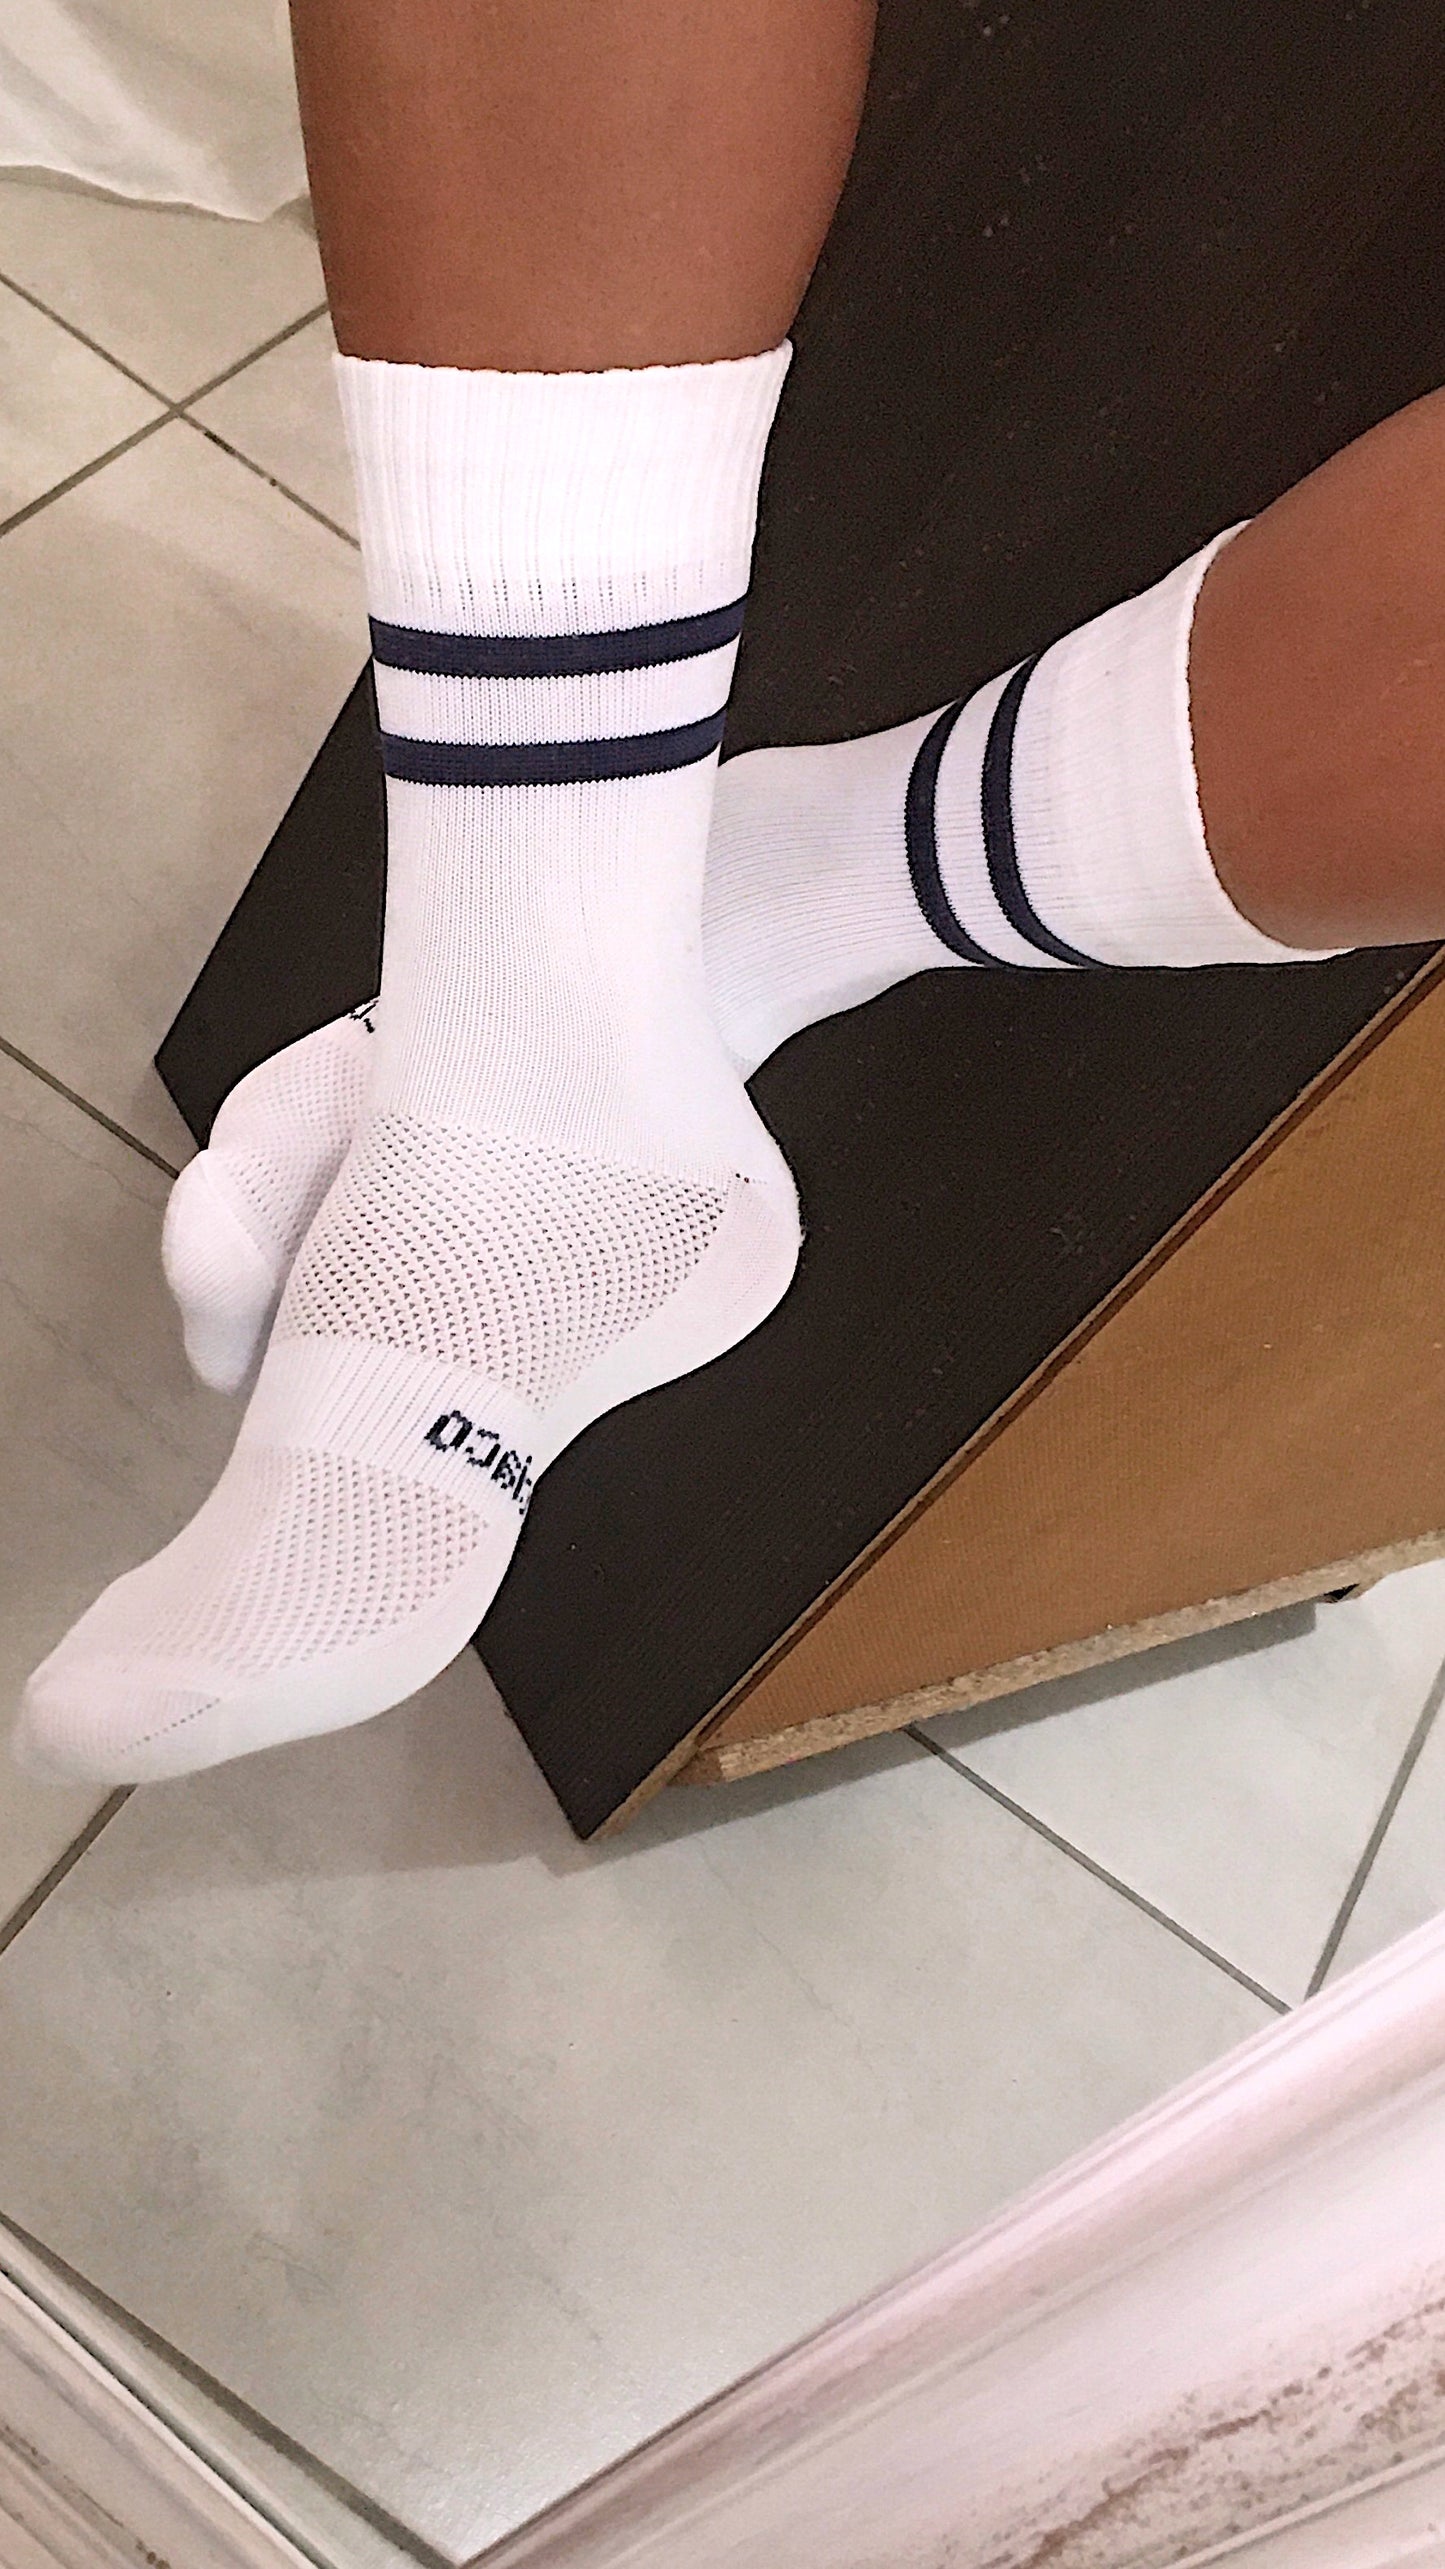 Cciaco White/Blue Sport Socks